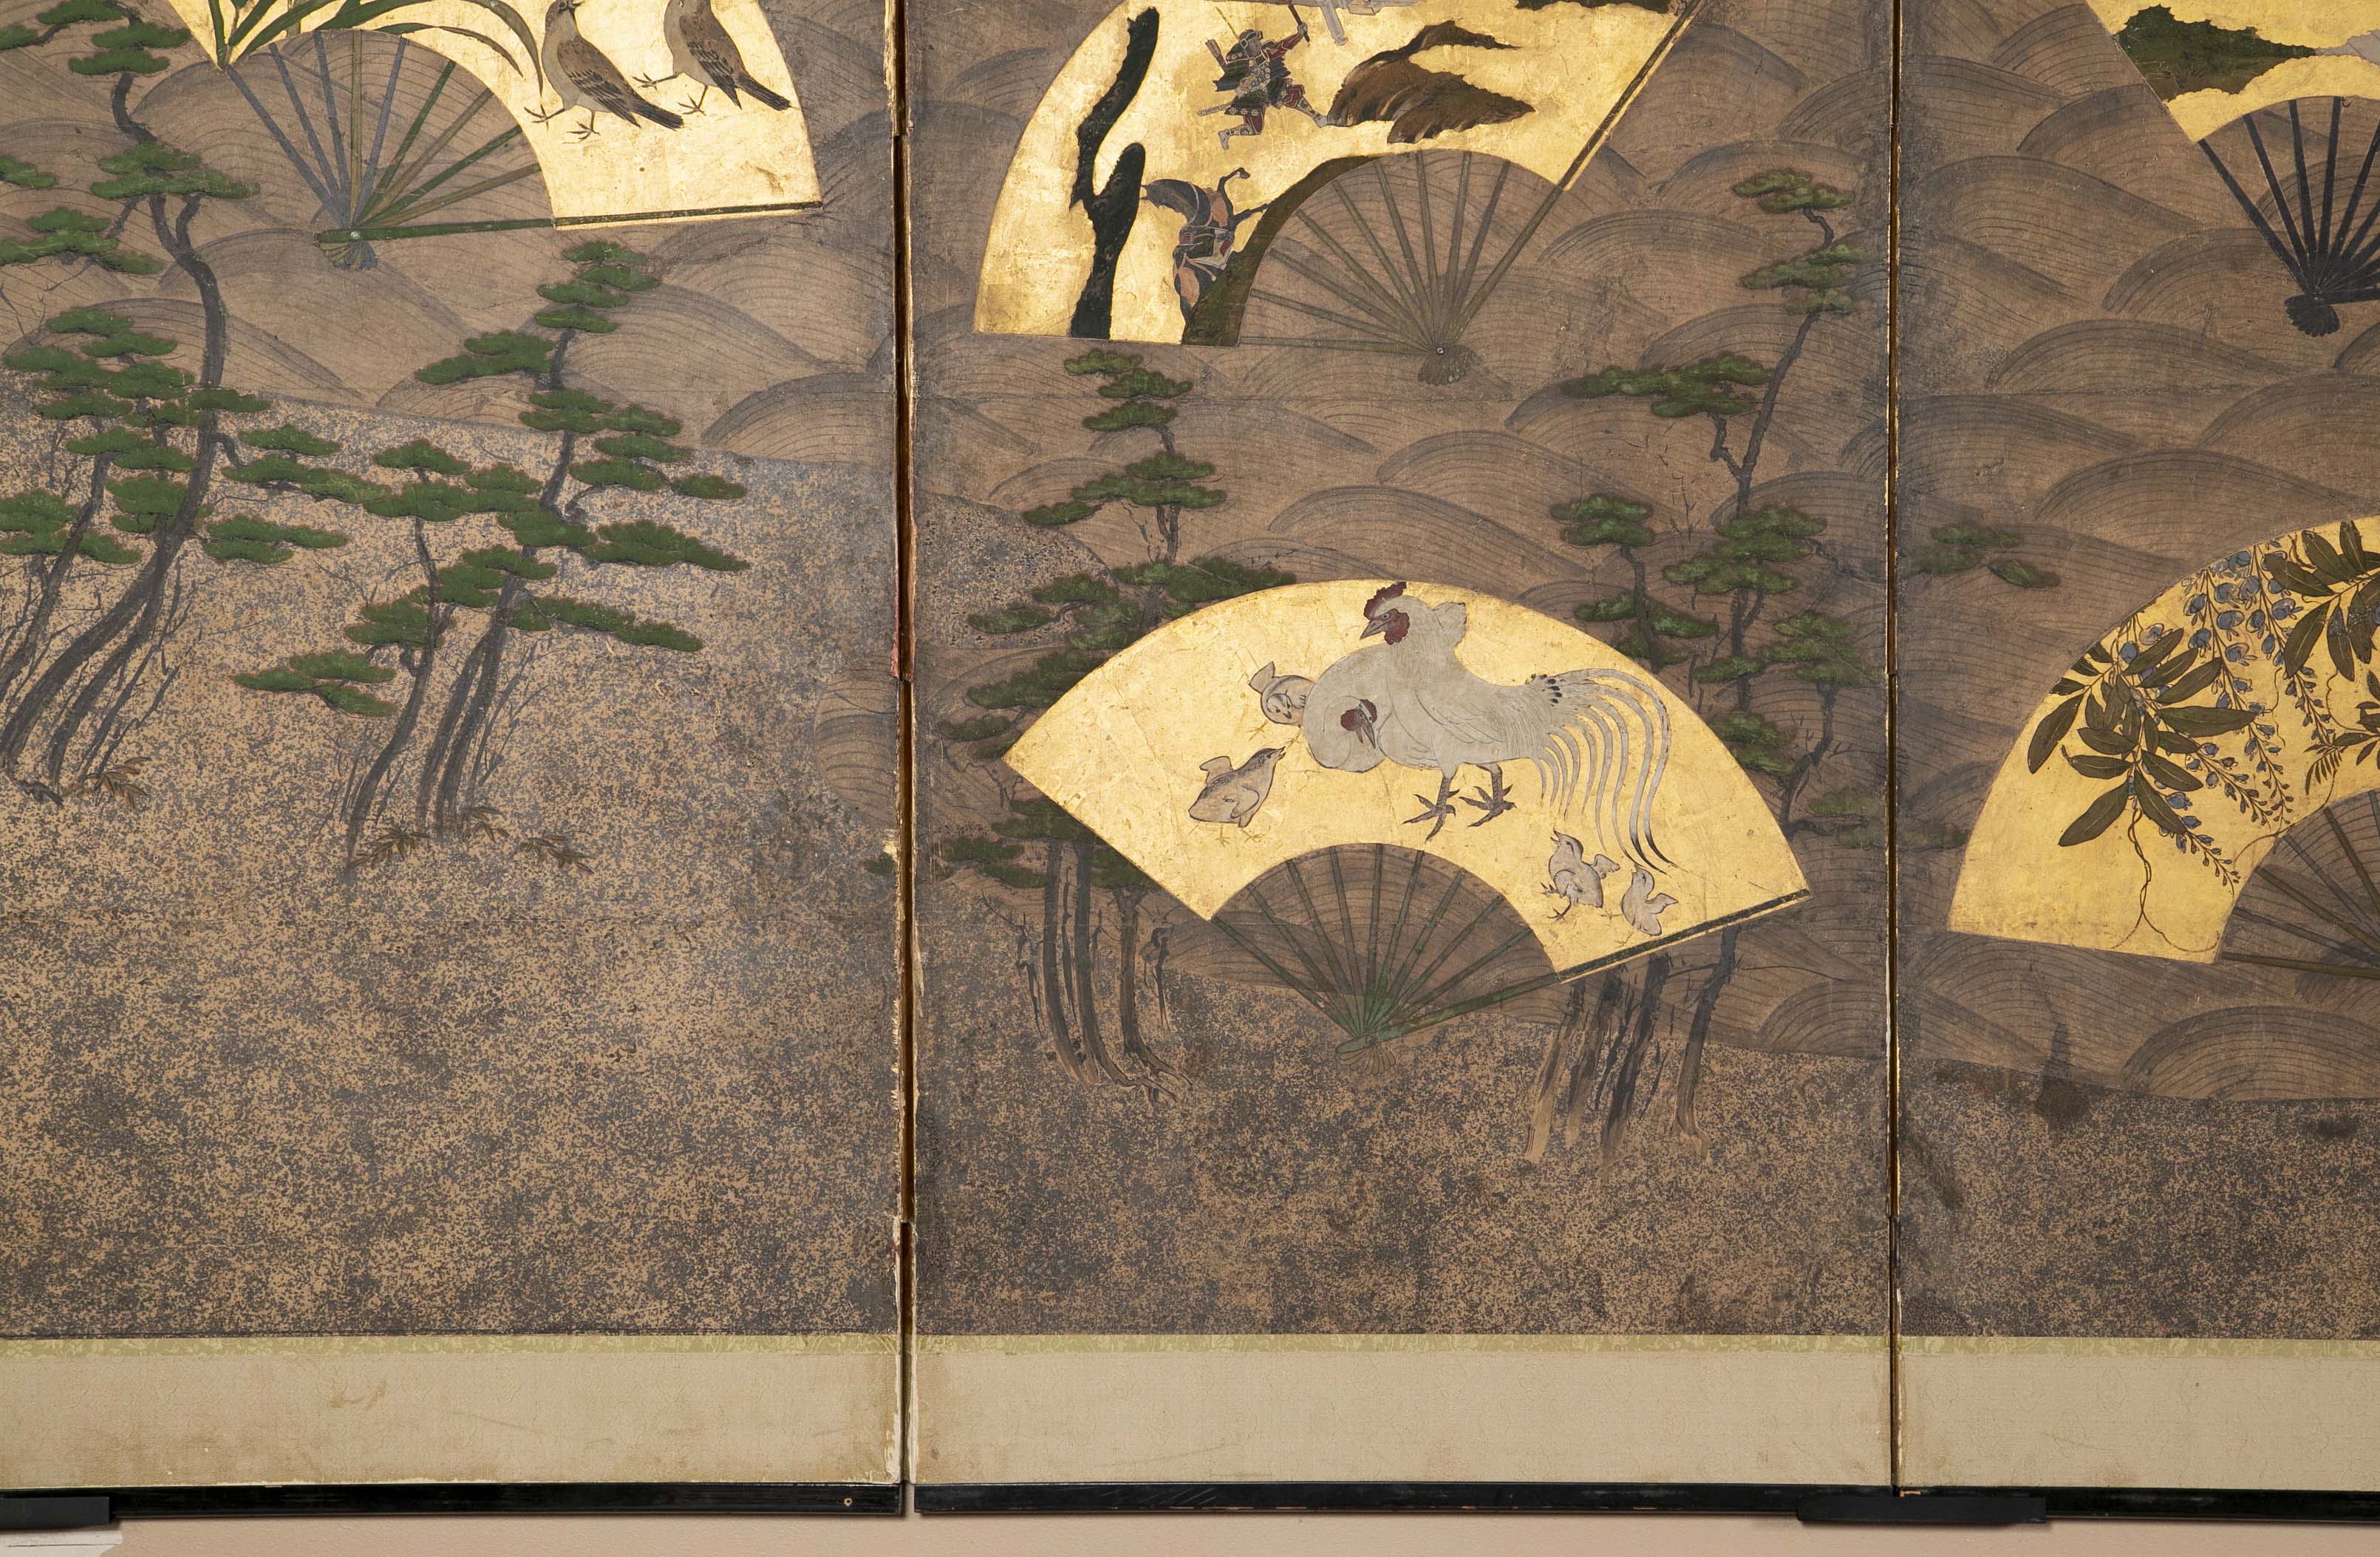 6 Panel Antique Japanese Screen Depicting Fans